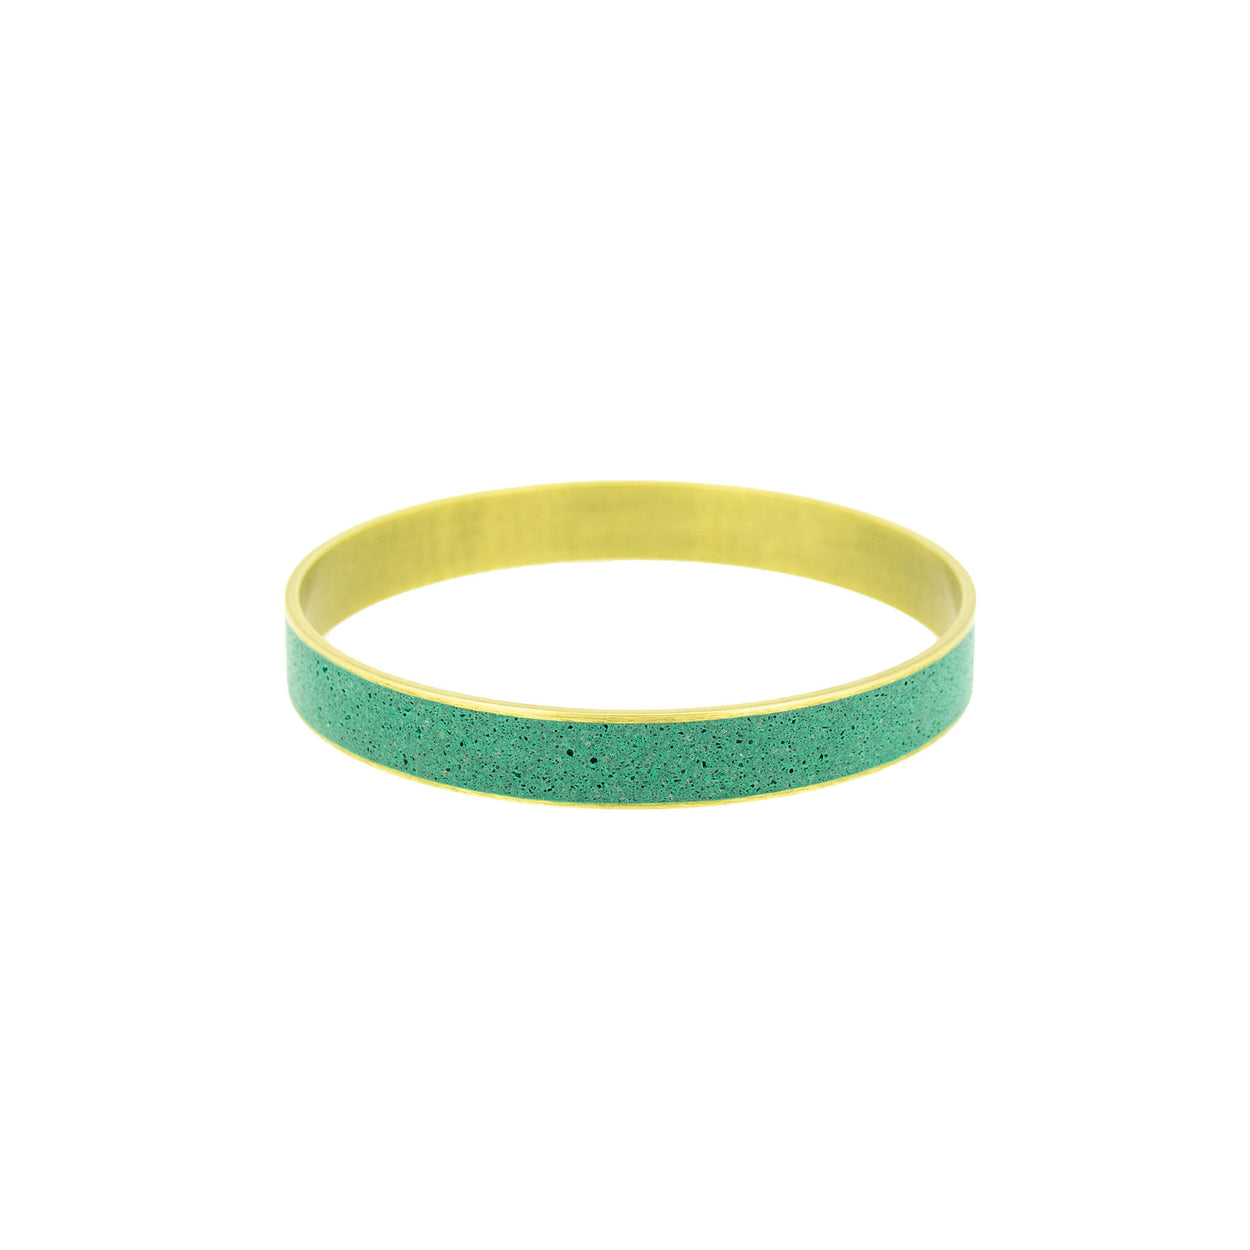 Ocean Green Pigmented Concrete Brass Bangle Bracelet Broad Gauge 3/8" or 12mm width